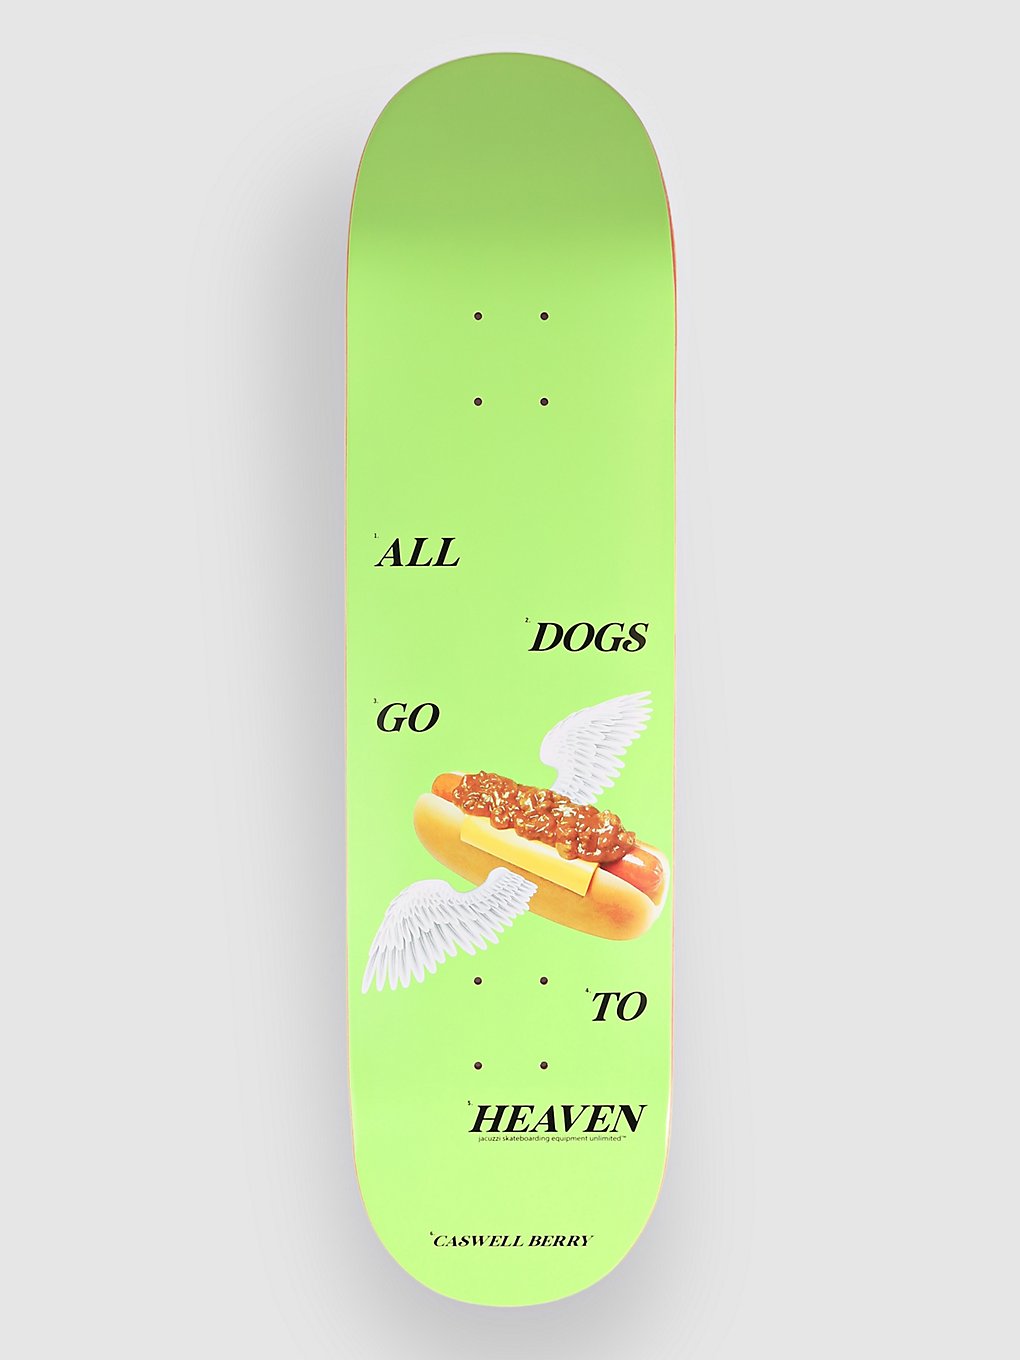 Jacuzzi Unlimited Caswell Berry Hot Dog Heaven 8.25" Skateboard Deck green kaufen